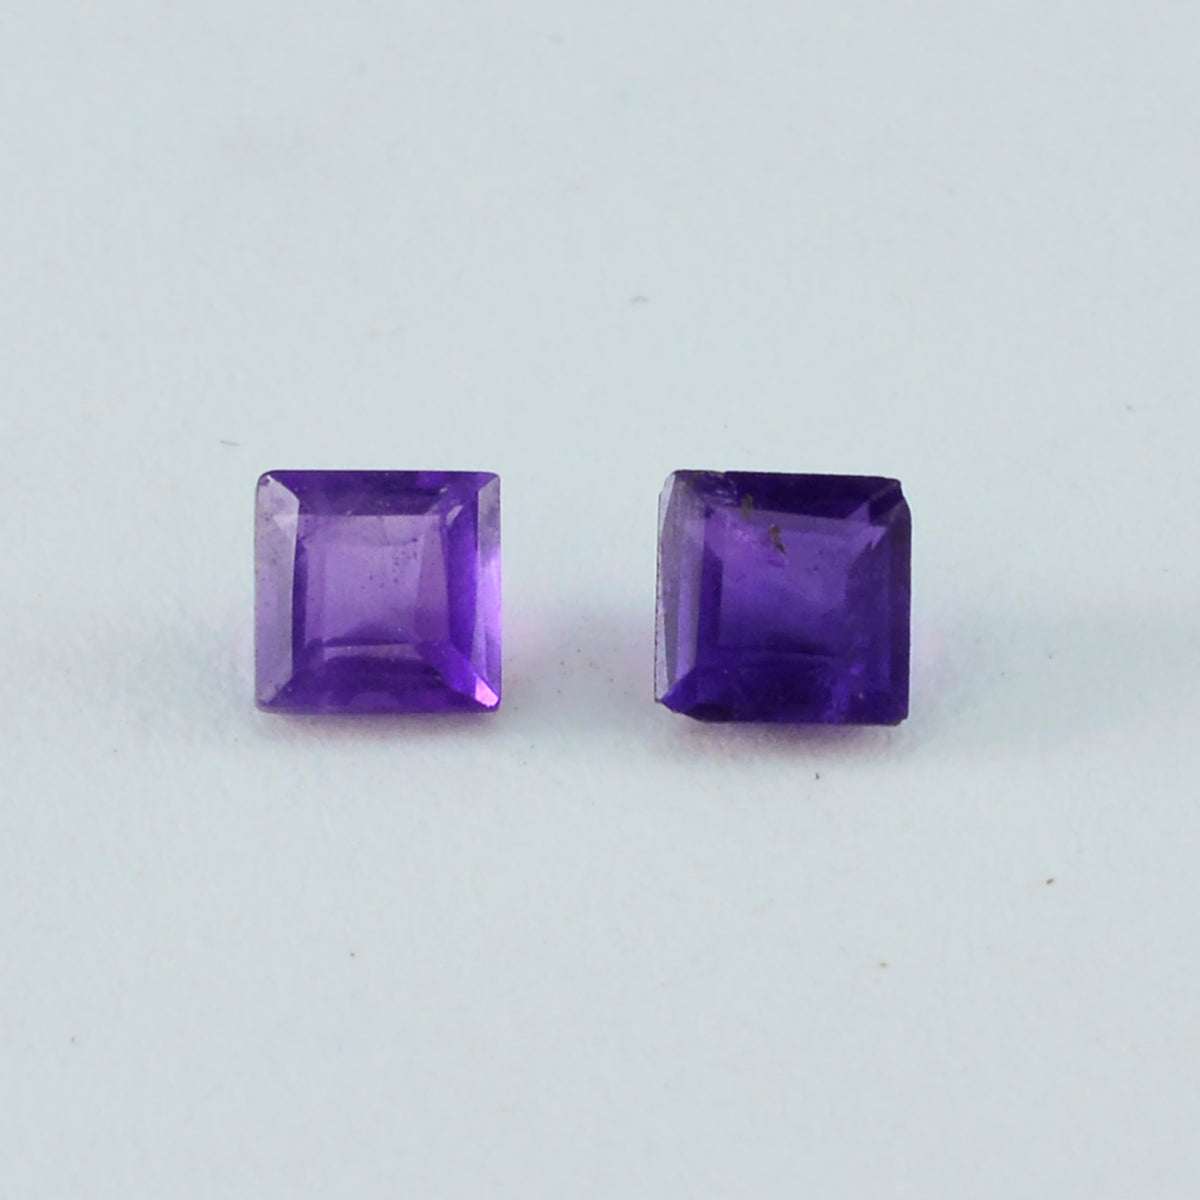 Riyogems 1PC Natural Purple Amethyst Faceted 11x11 mm Square Shape handsome Quality Loose Gem